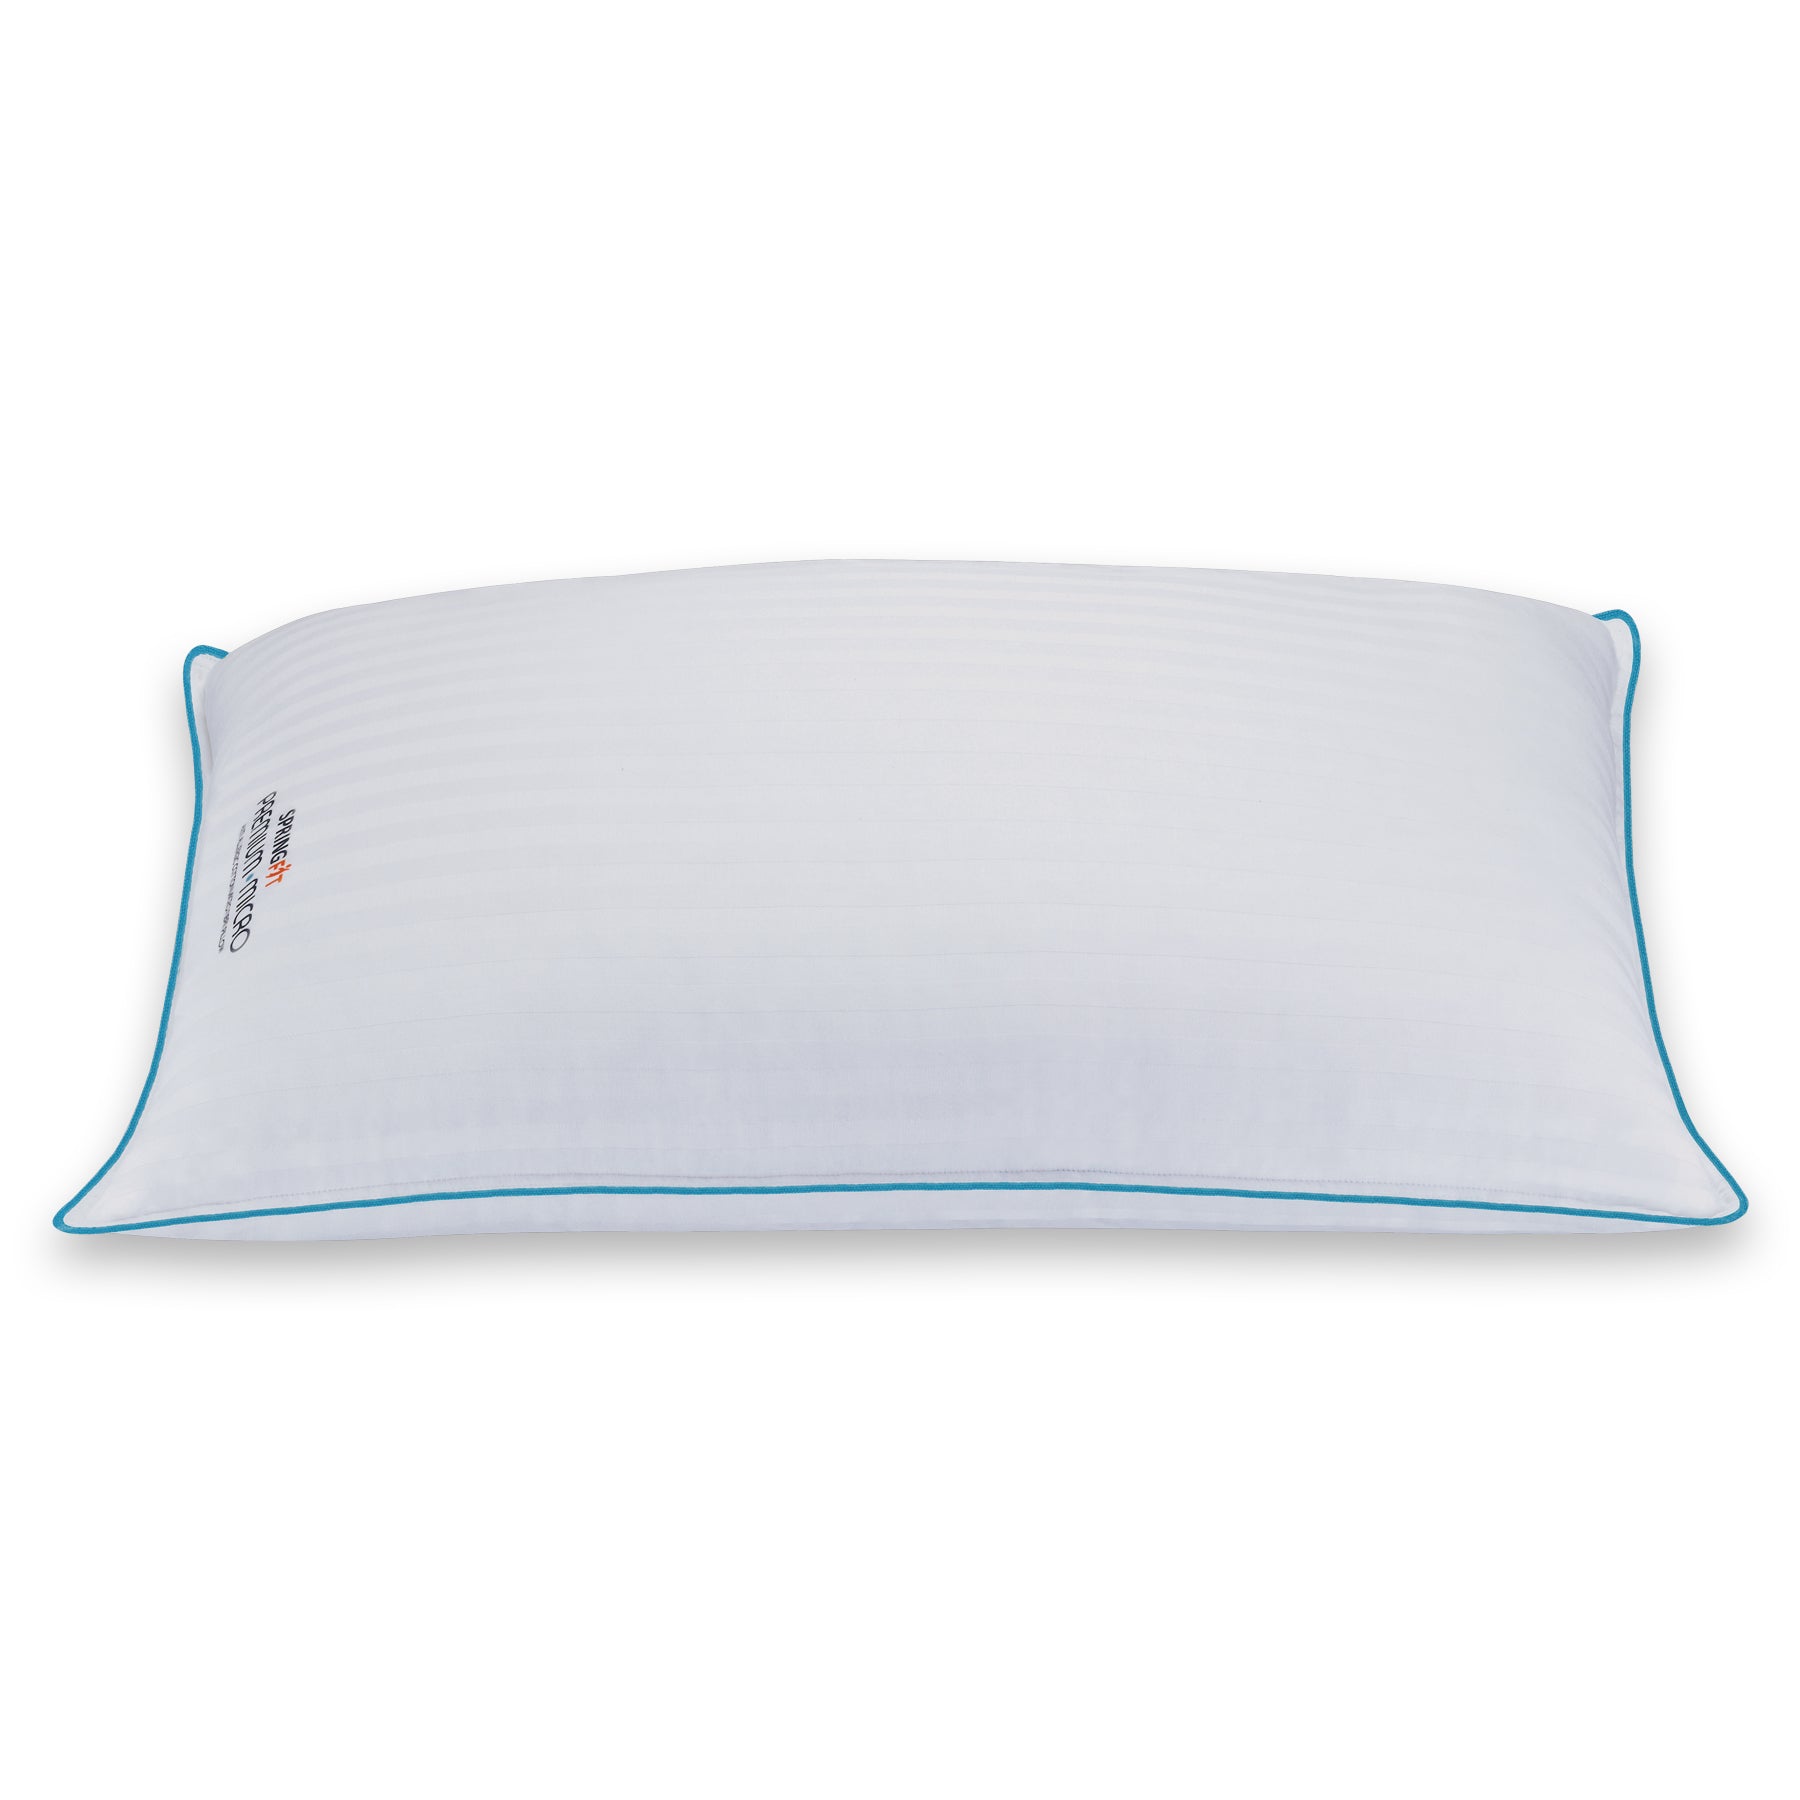 Springfit Premium Micro Pillow